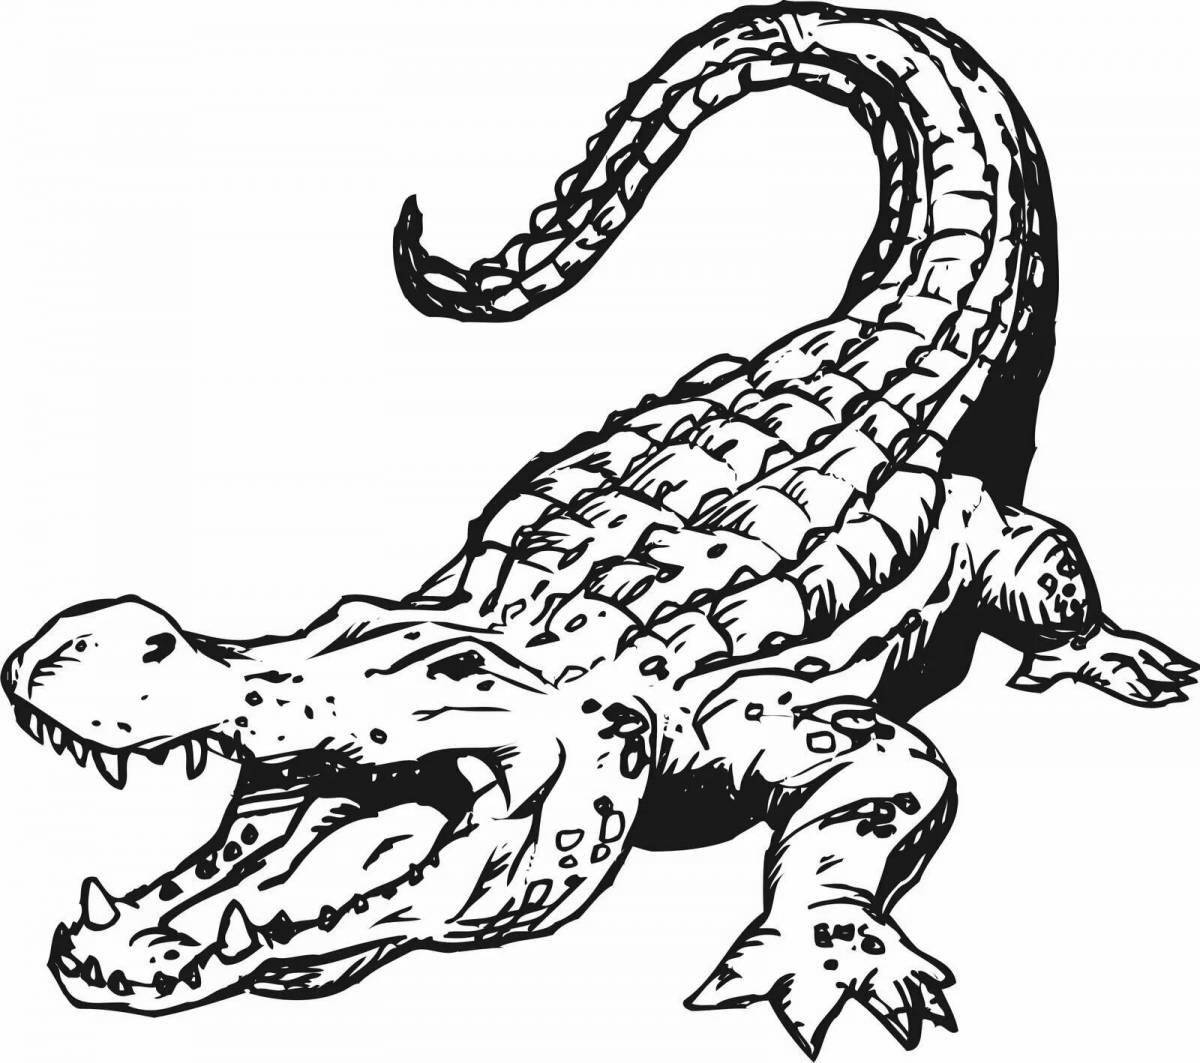 Monty funny crocodile coloring book